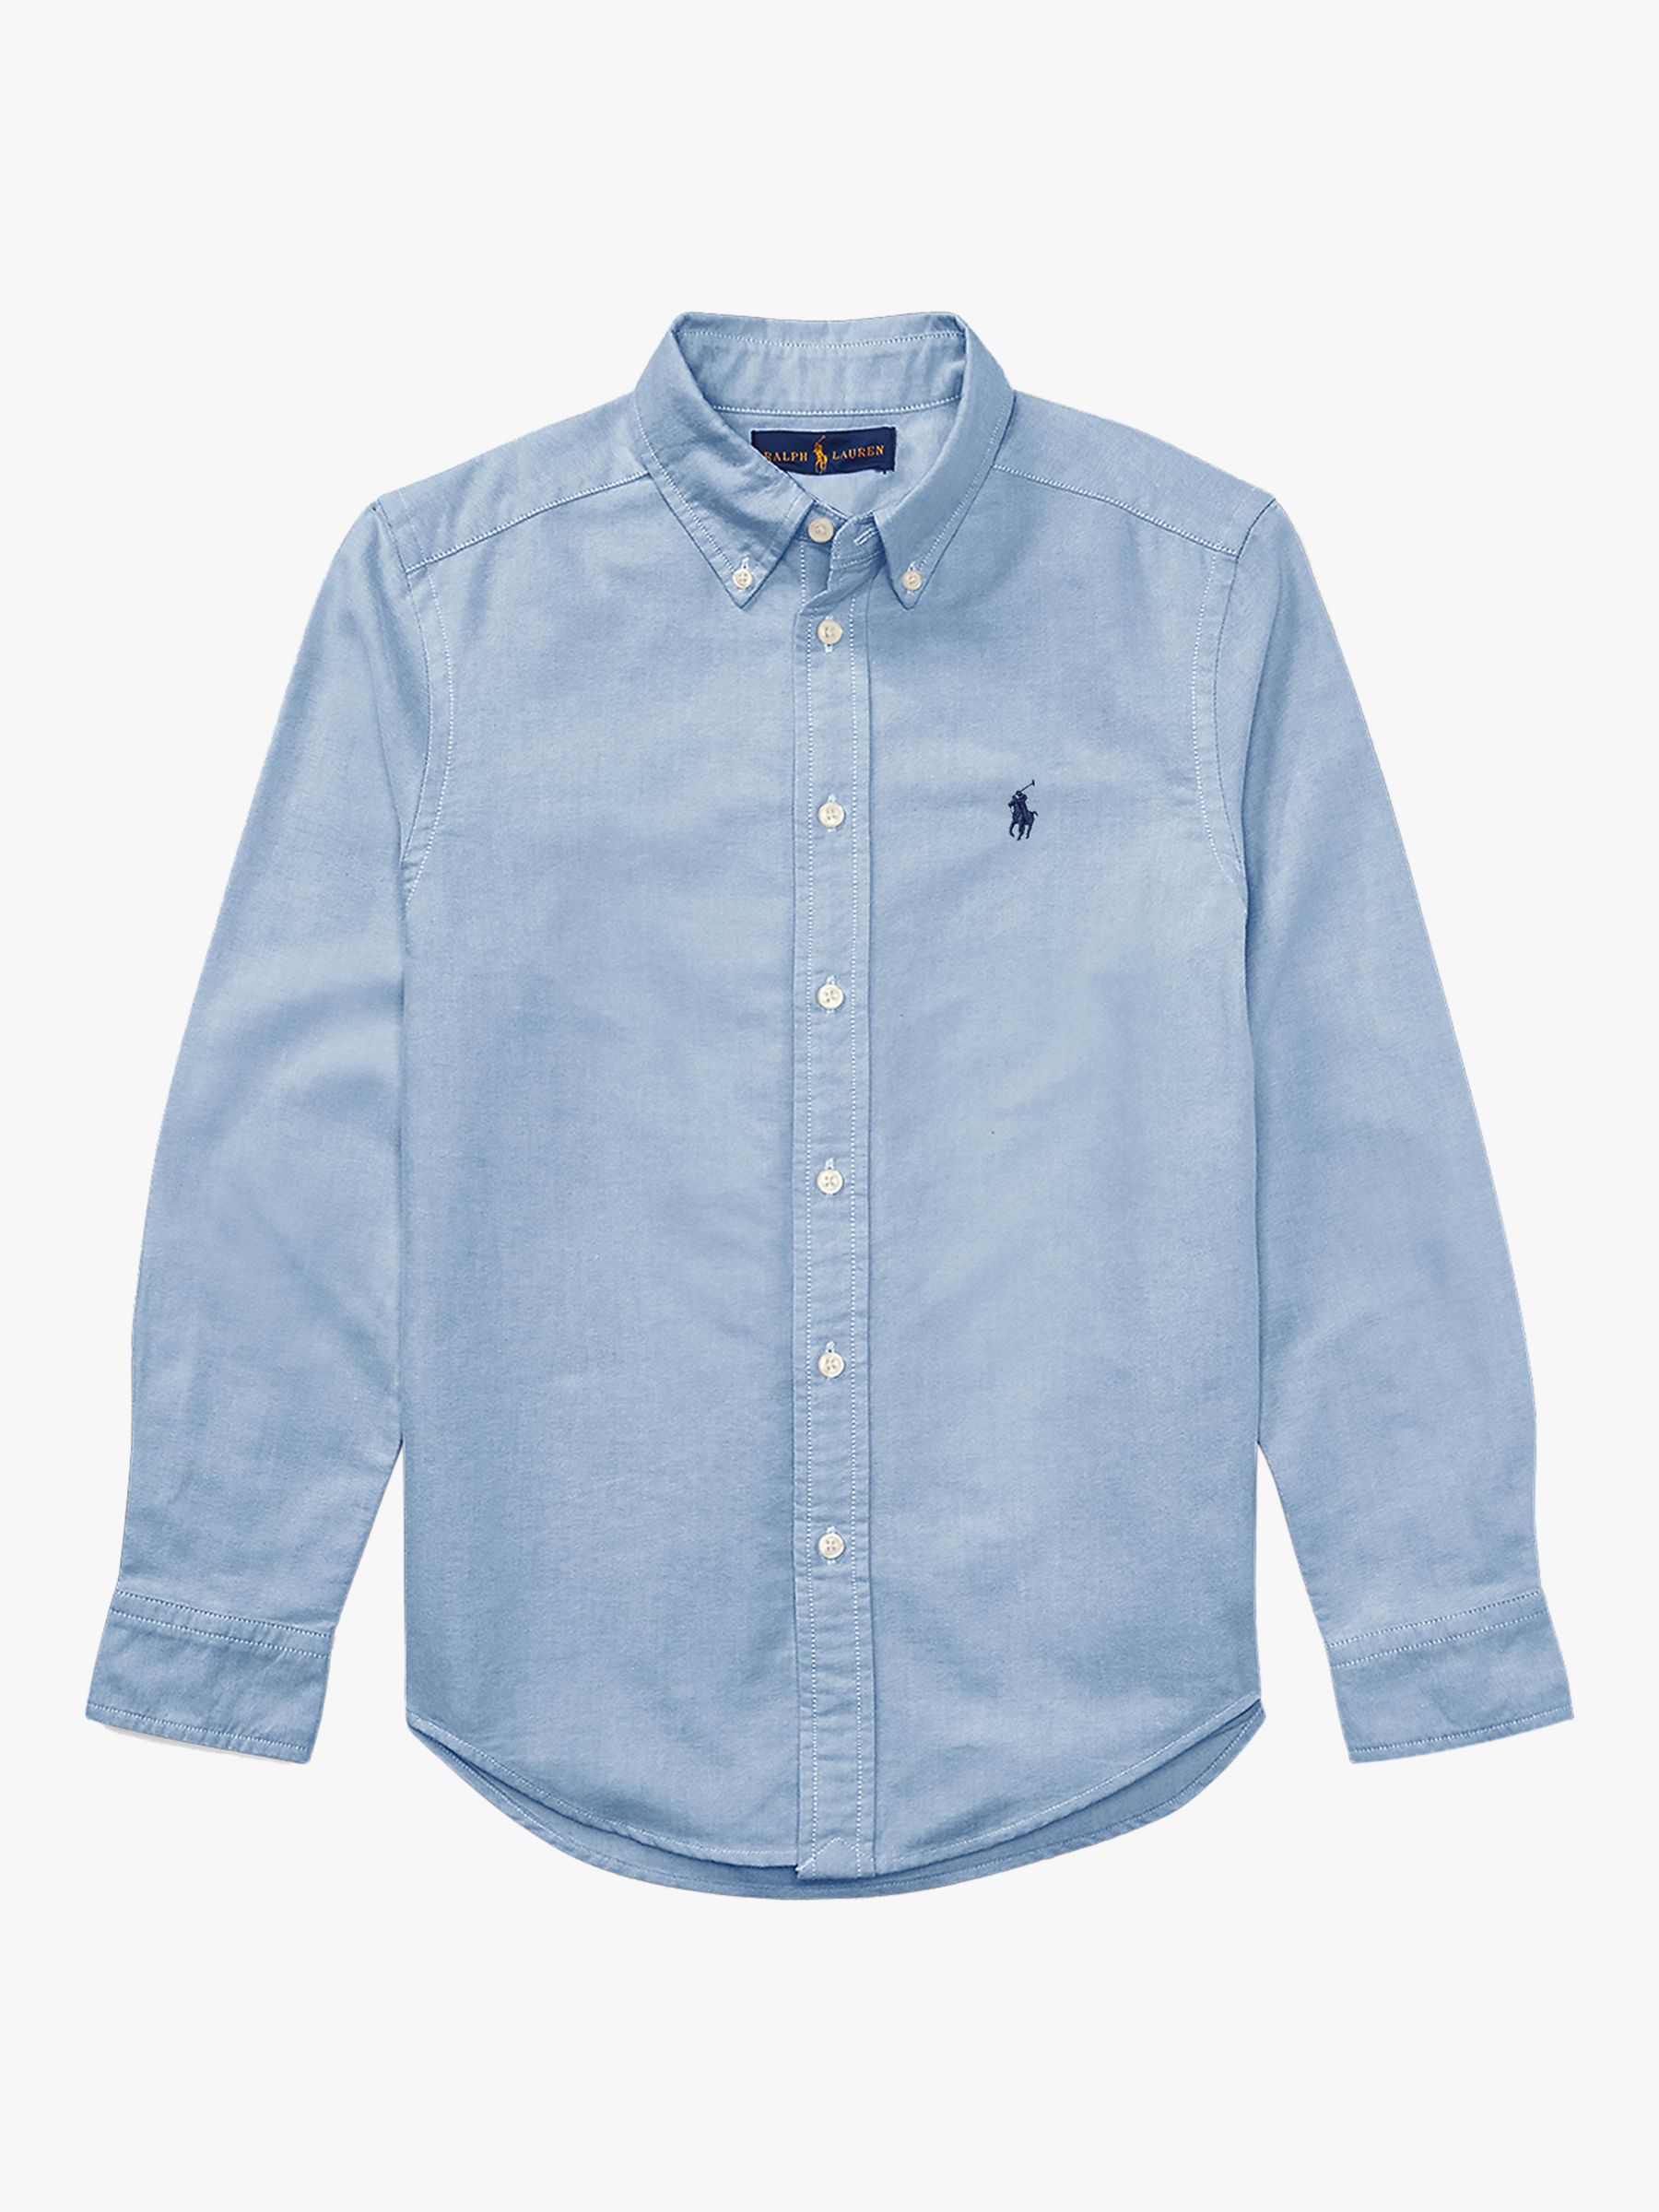 Polo Ralph Lauren Kids' Oxford Shirt, Blue, 2 years